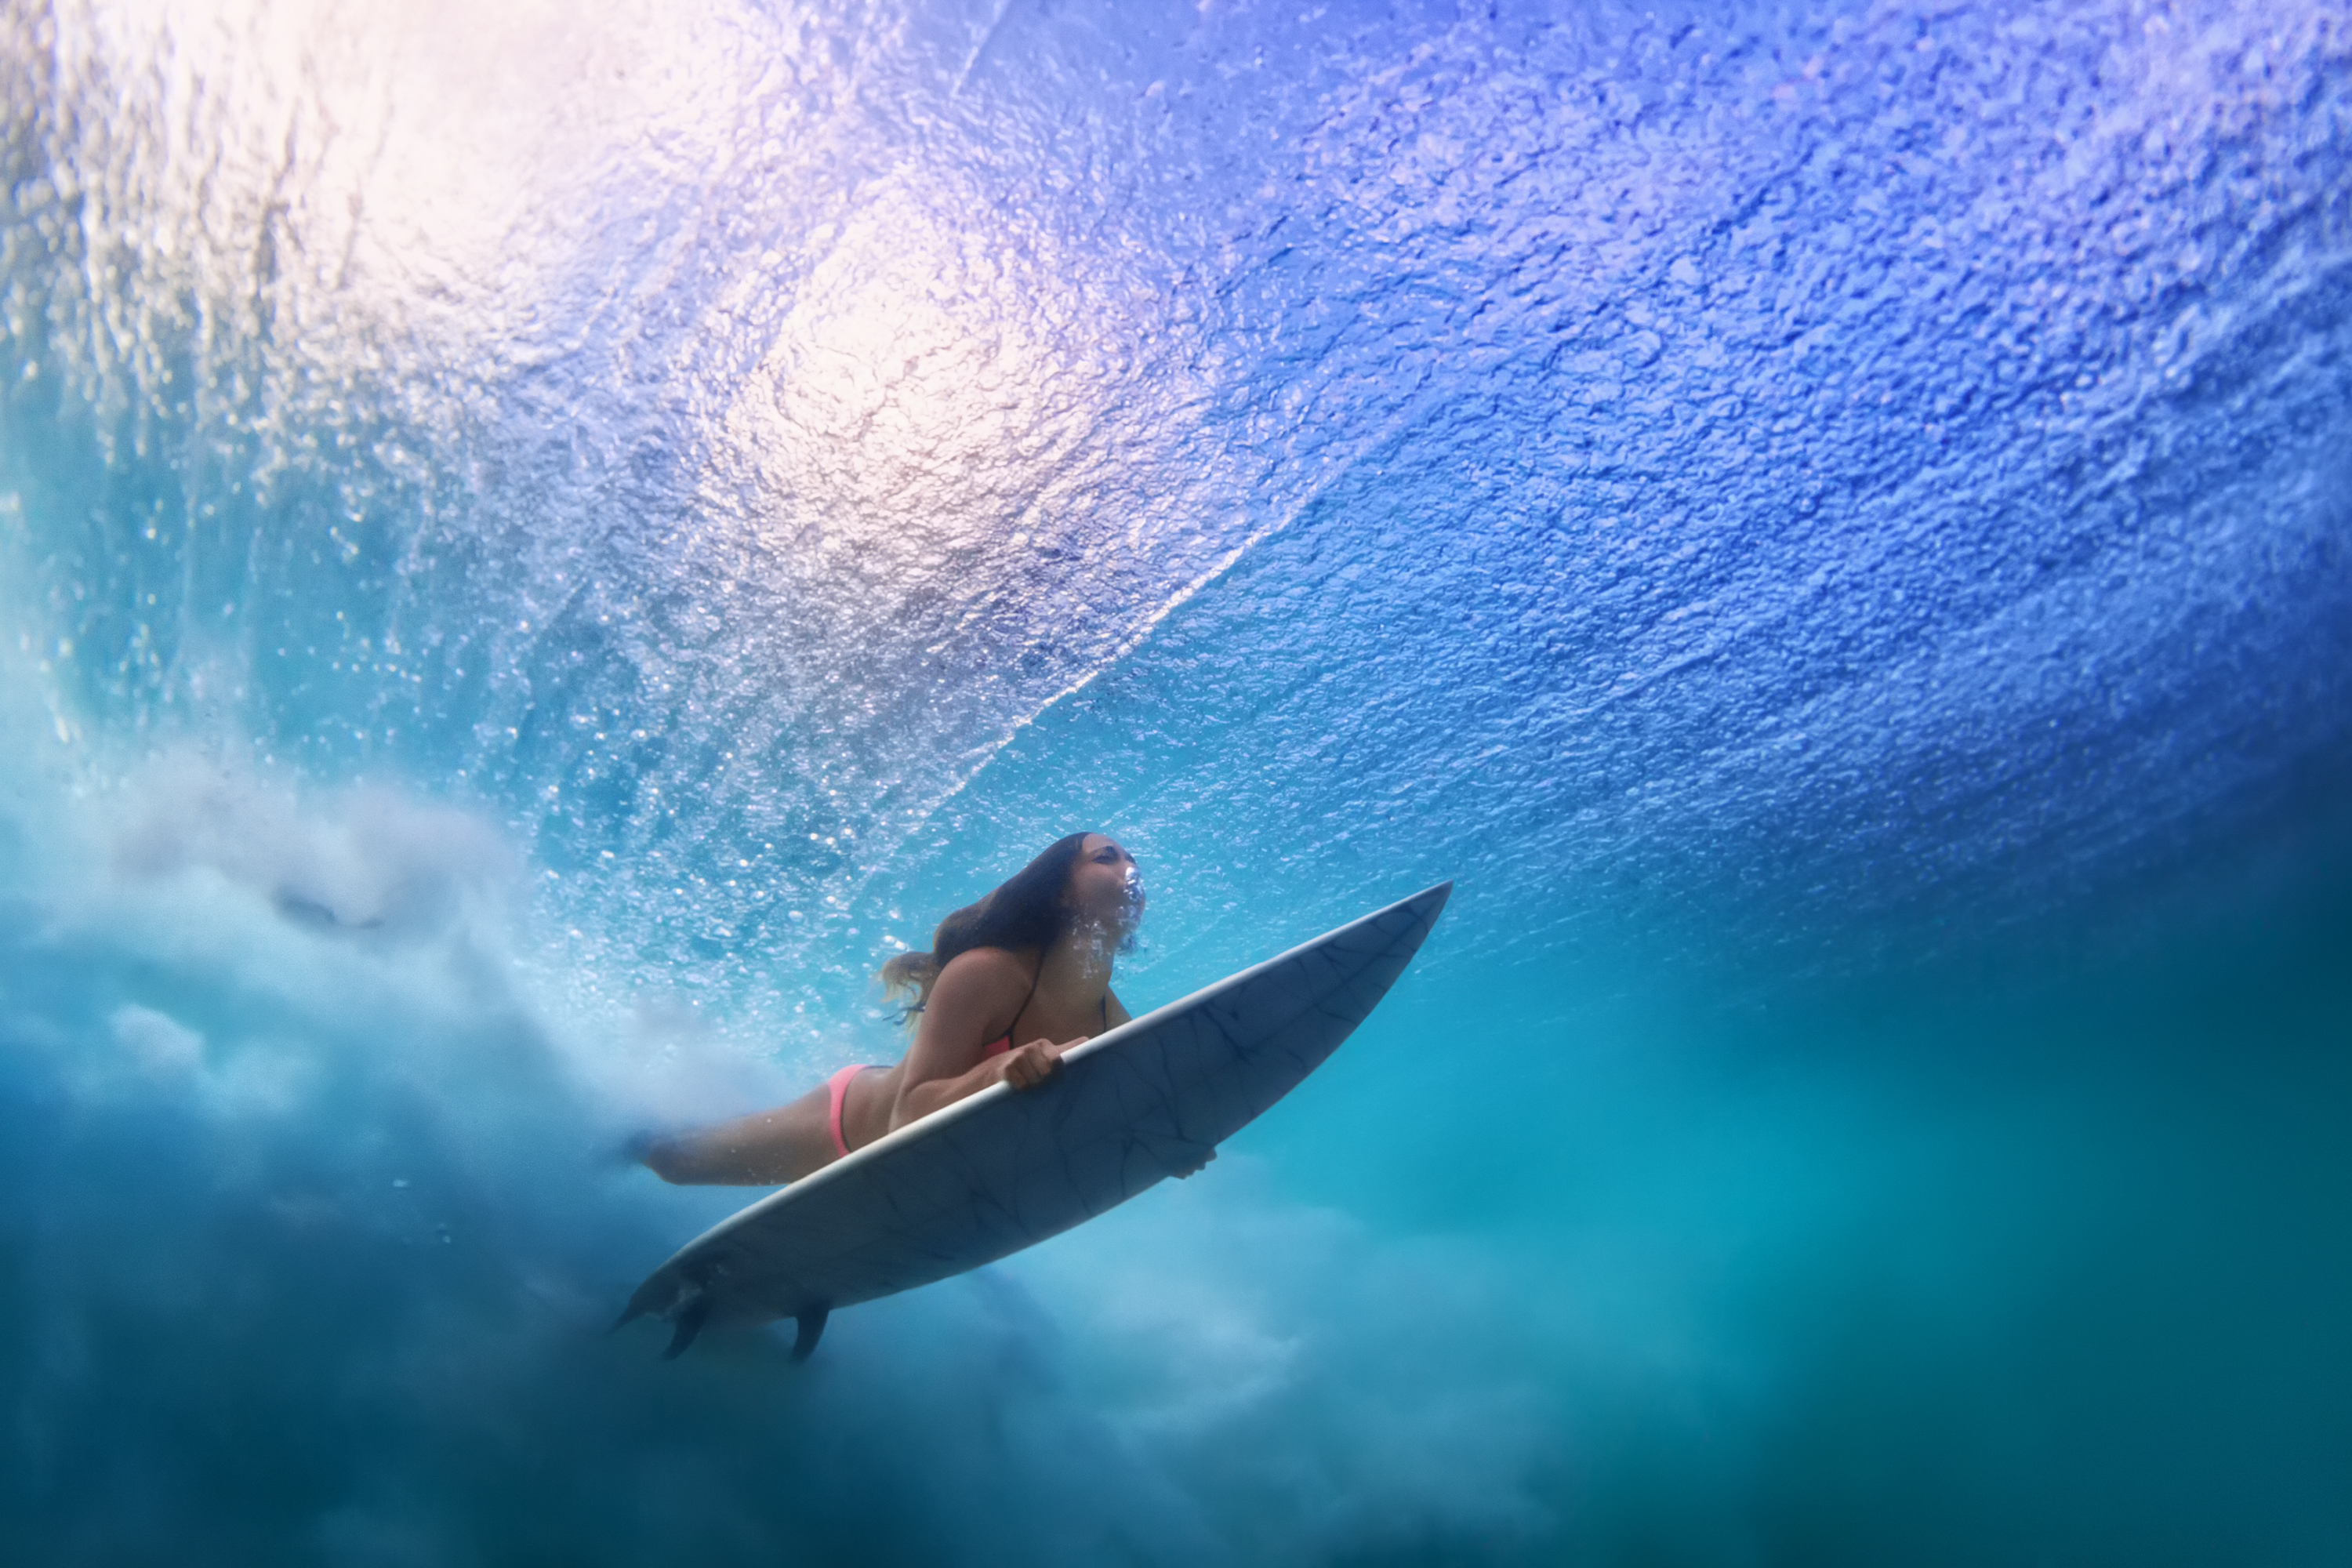 Surfer under a wave